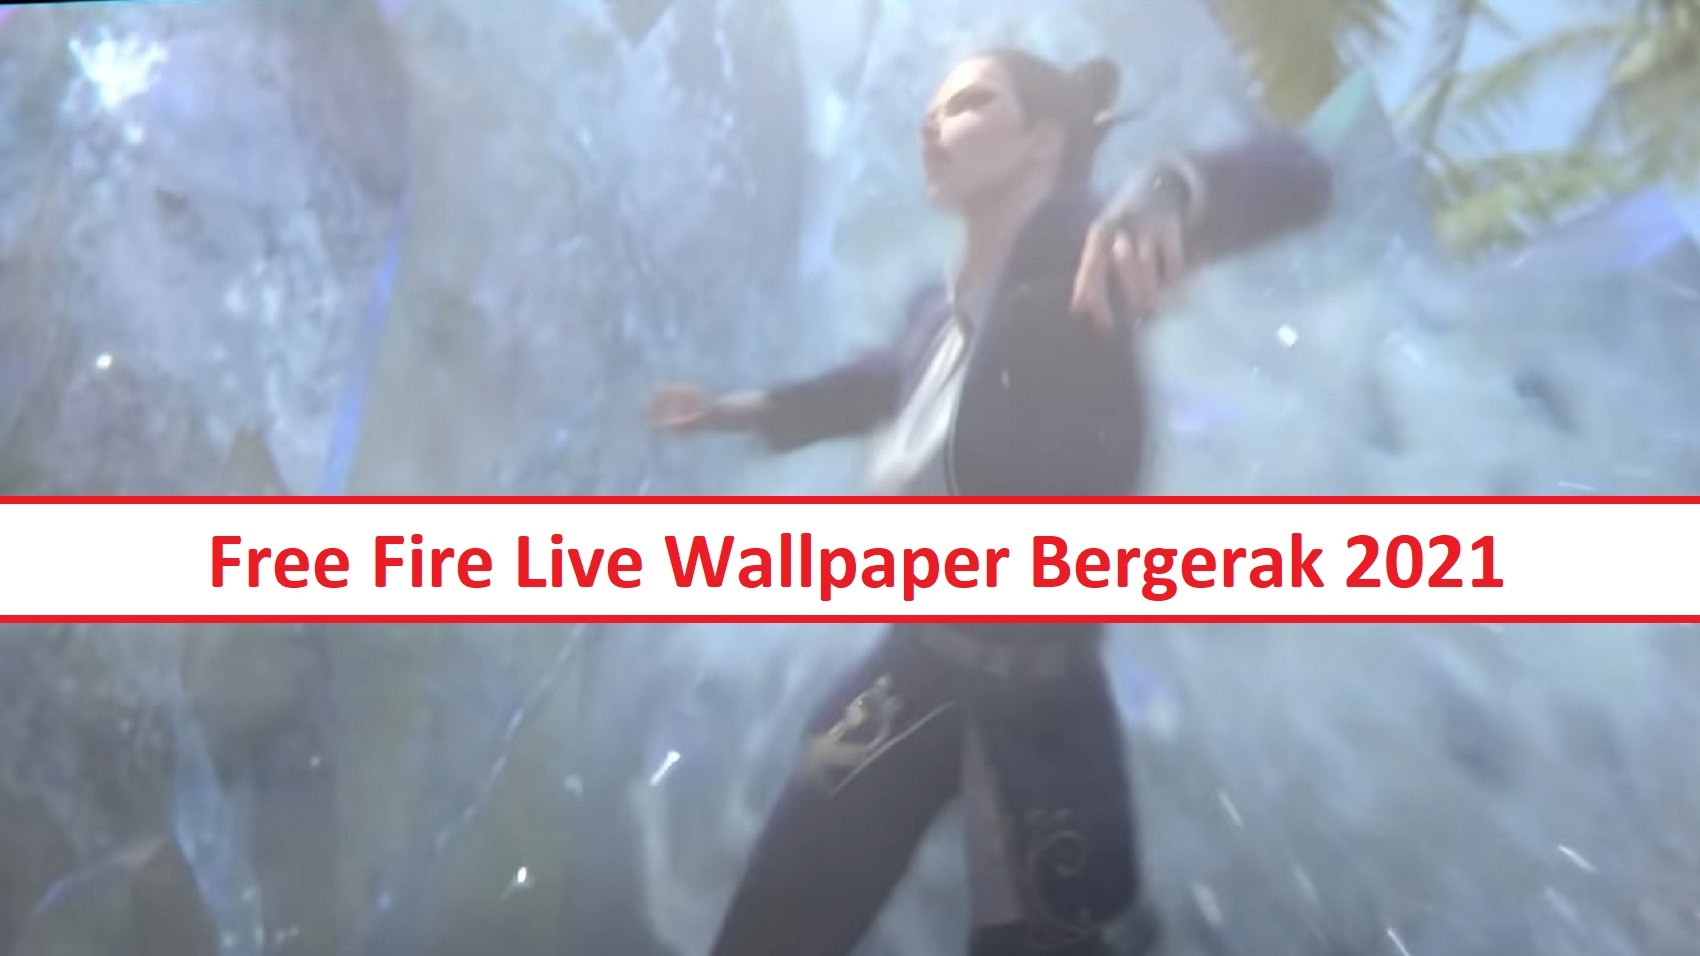 Free Fire Live Wallpaper Bergerak 2021 Esportsku